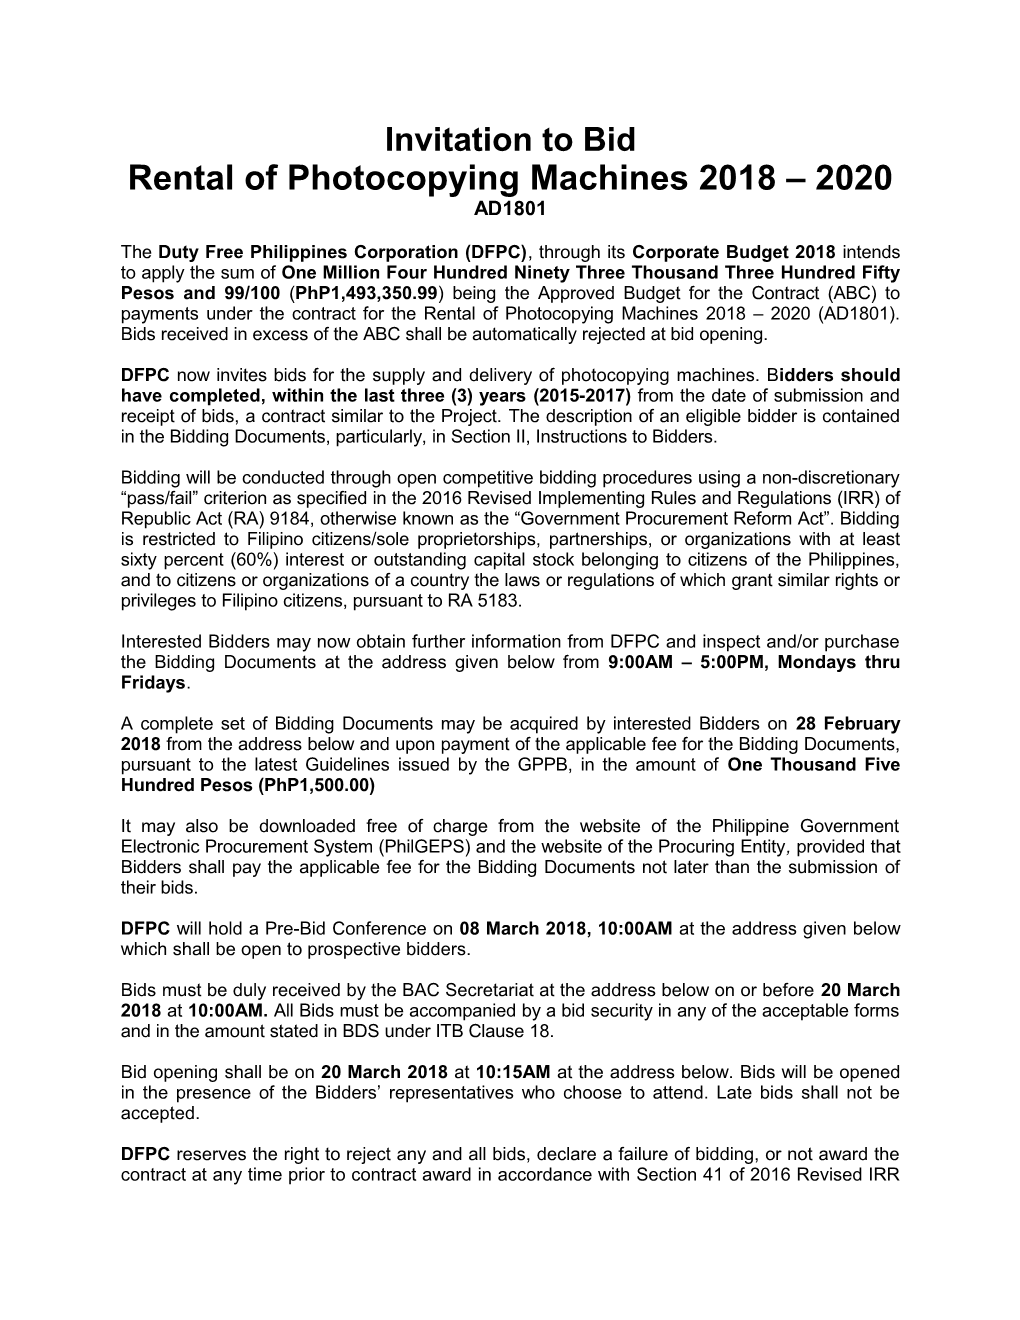 Rental of Photocopying Machines 2018 2020